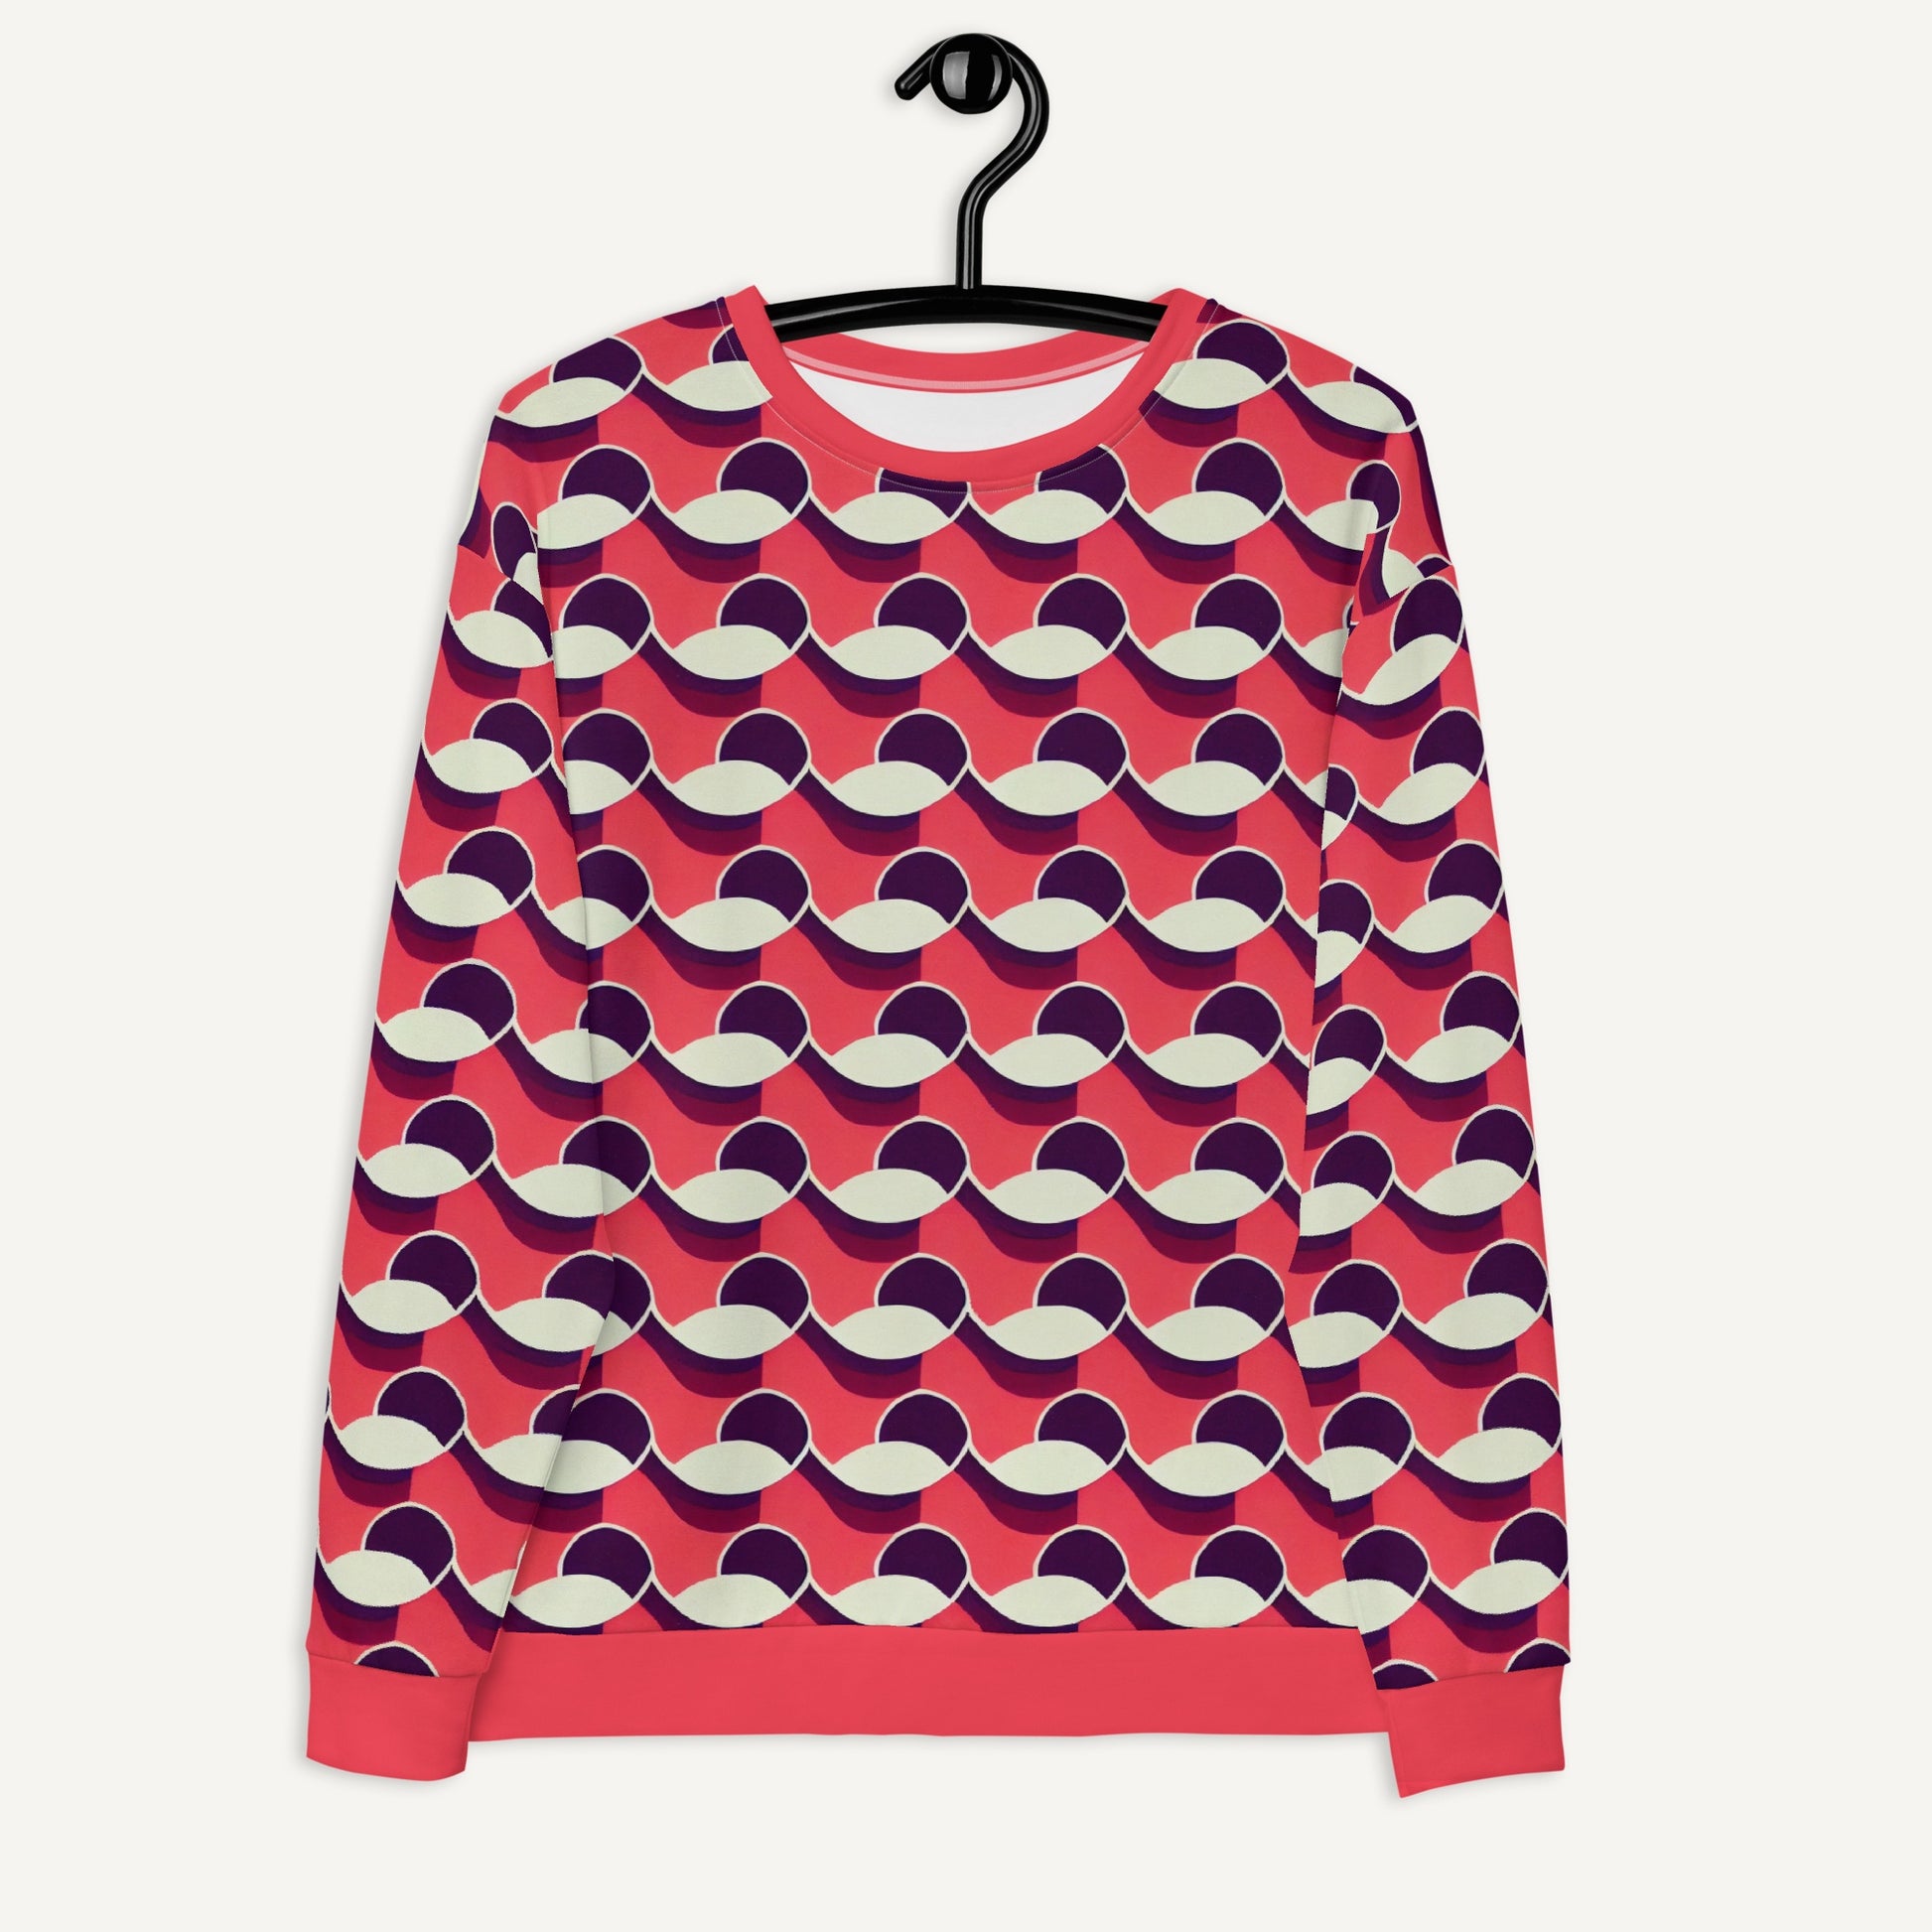 Pinstripe sweatshirt with modal